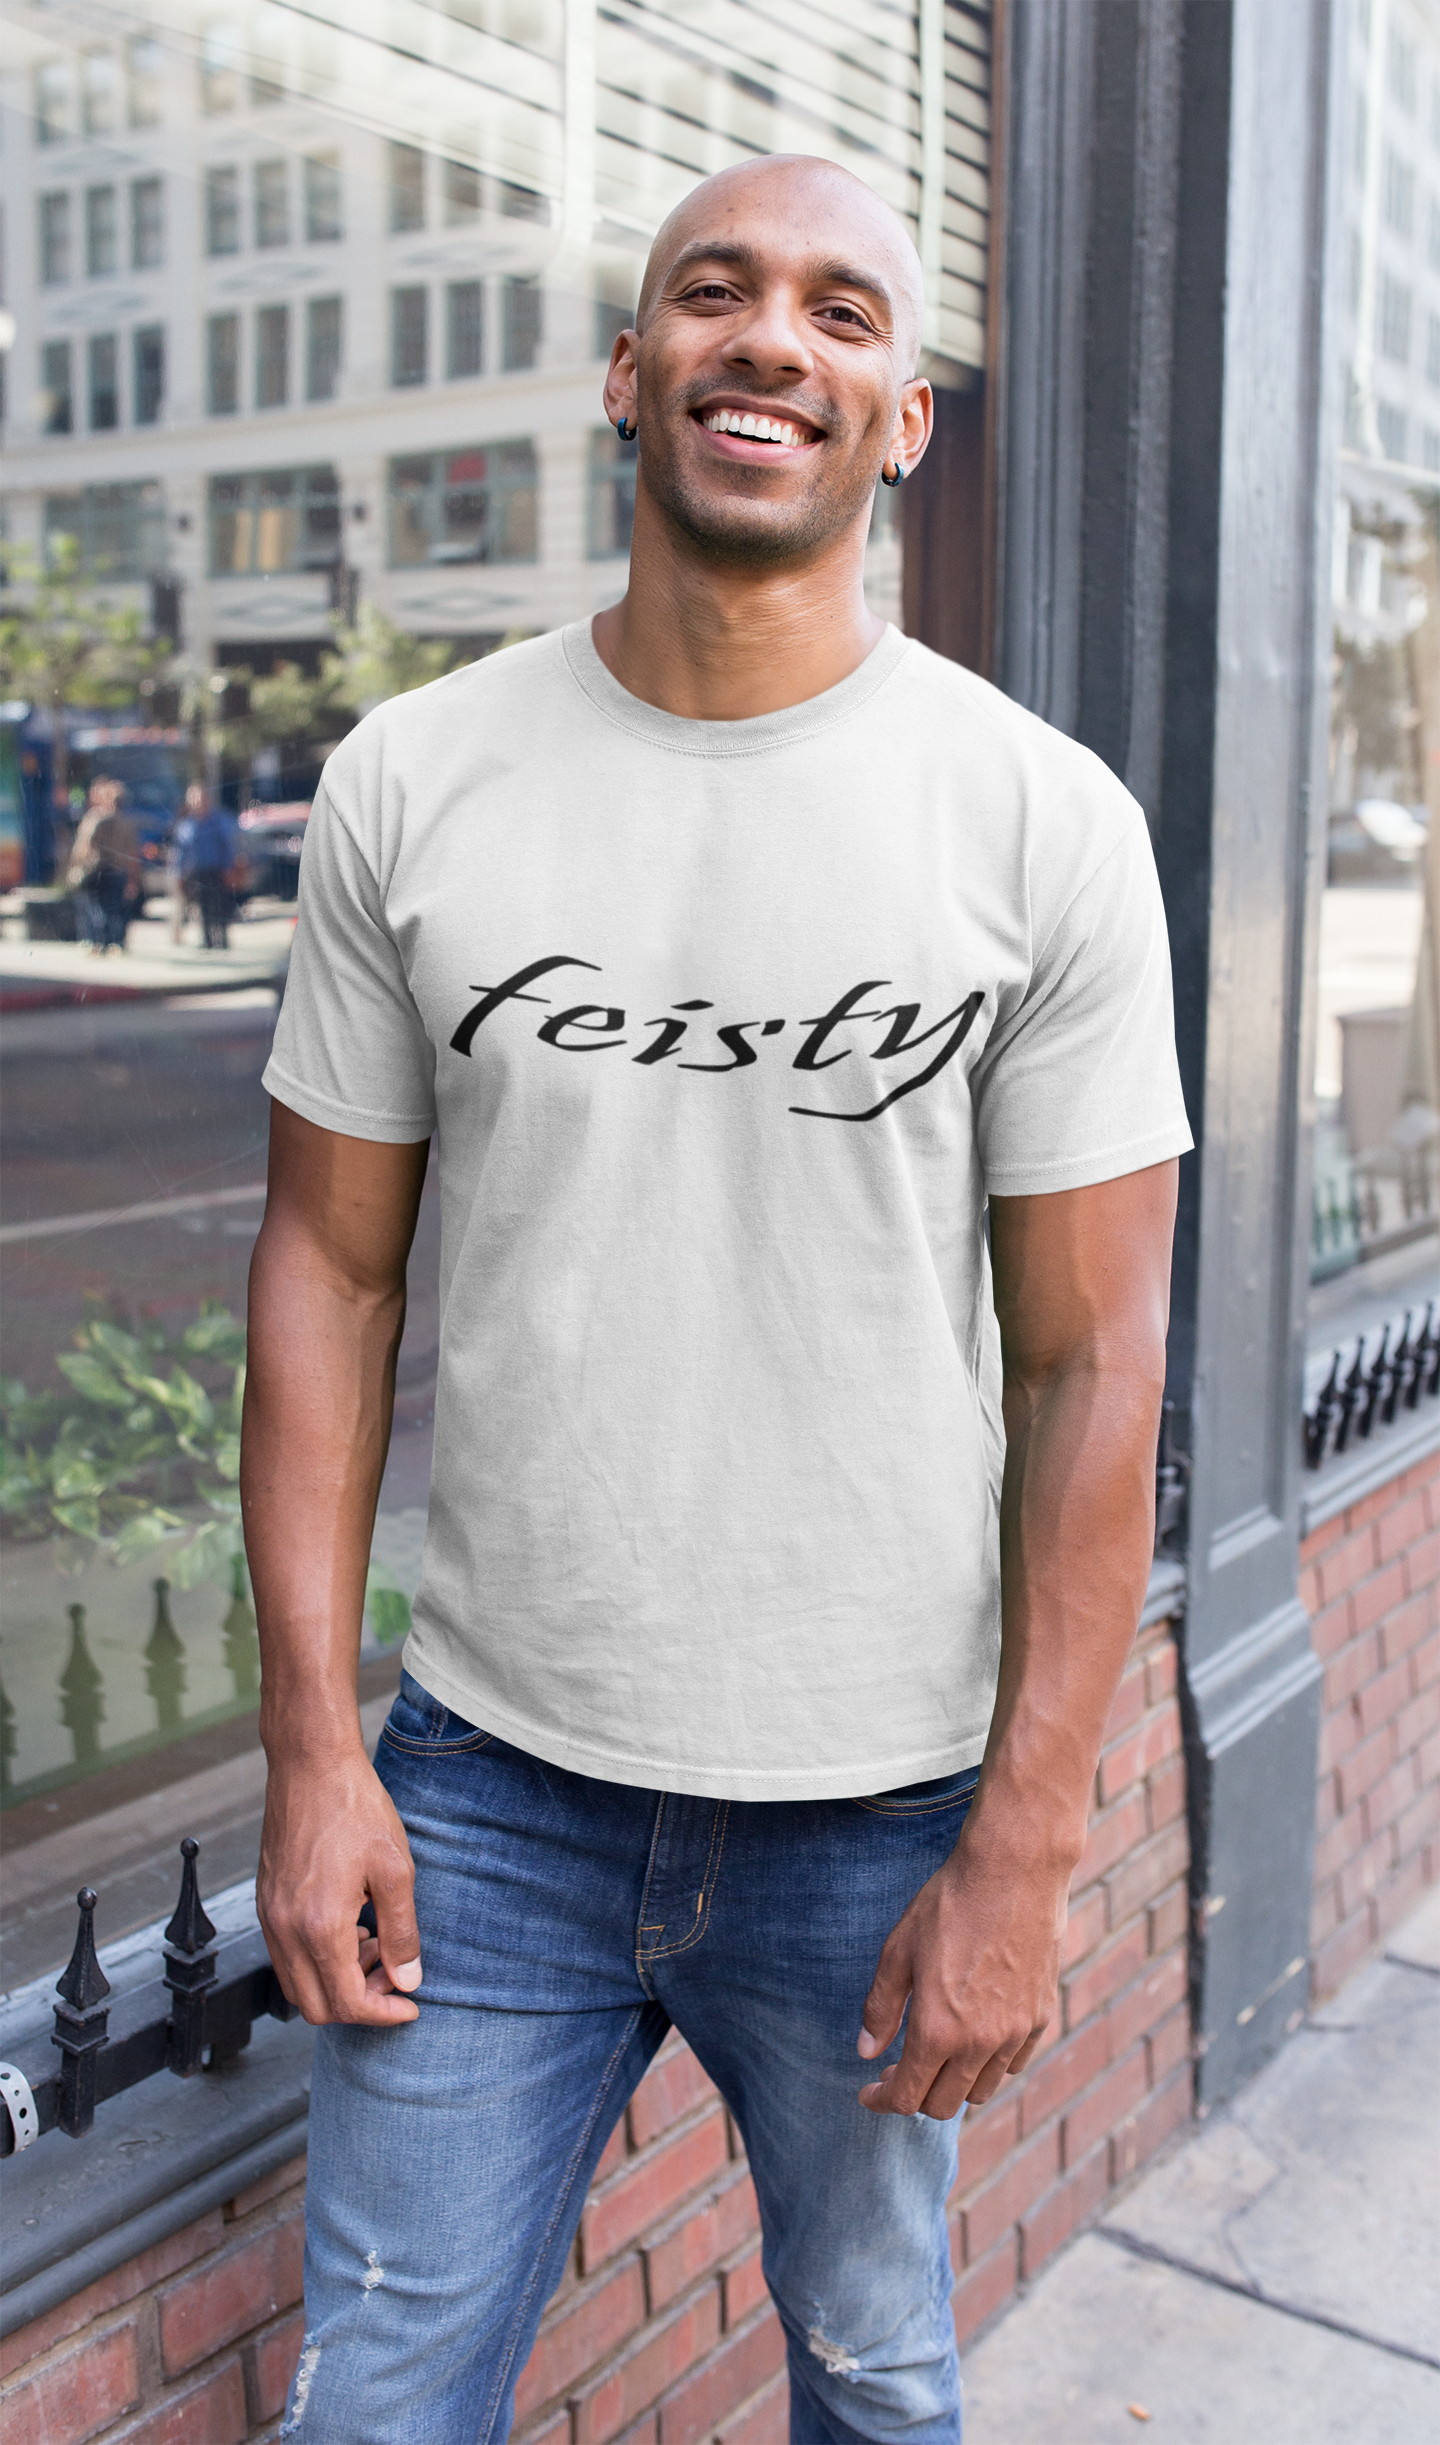 Feisty Tshirt